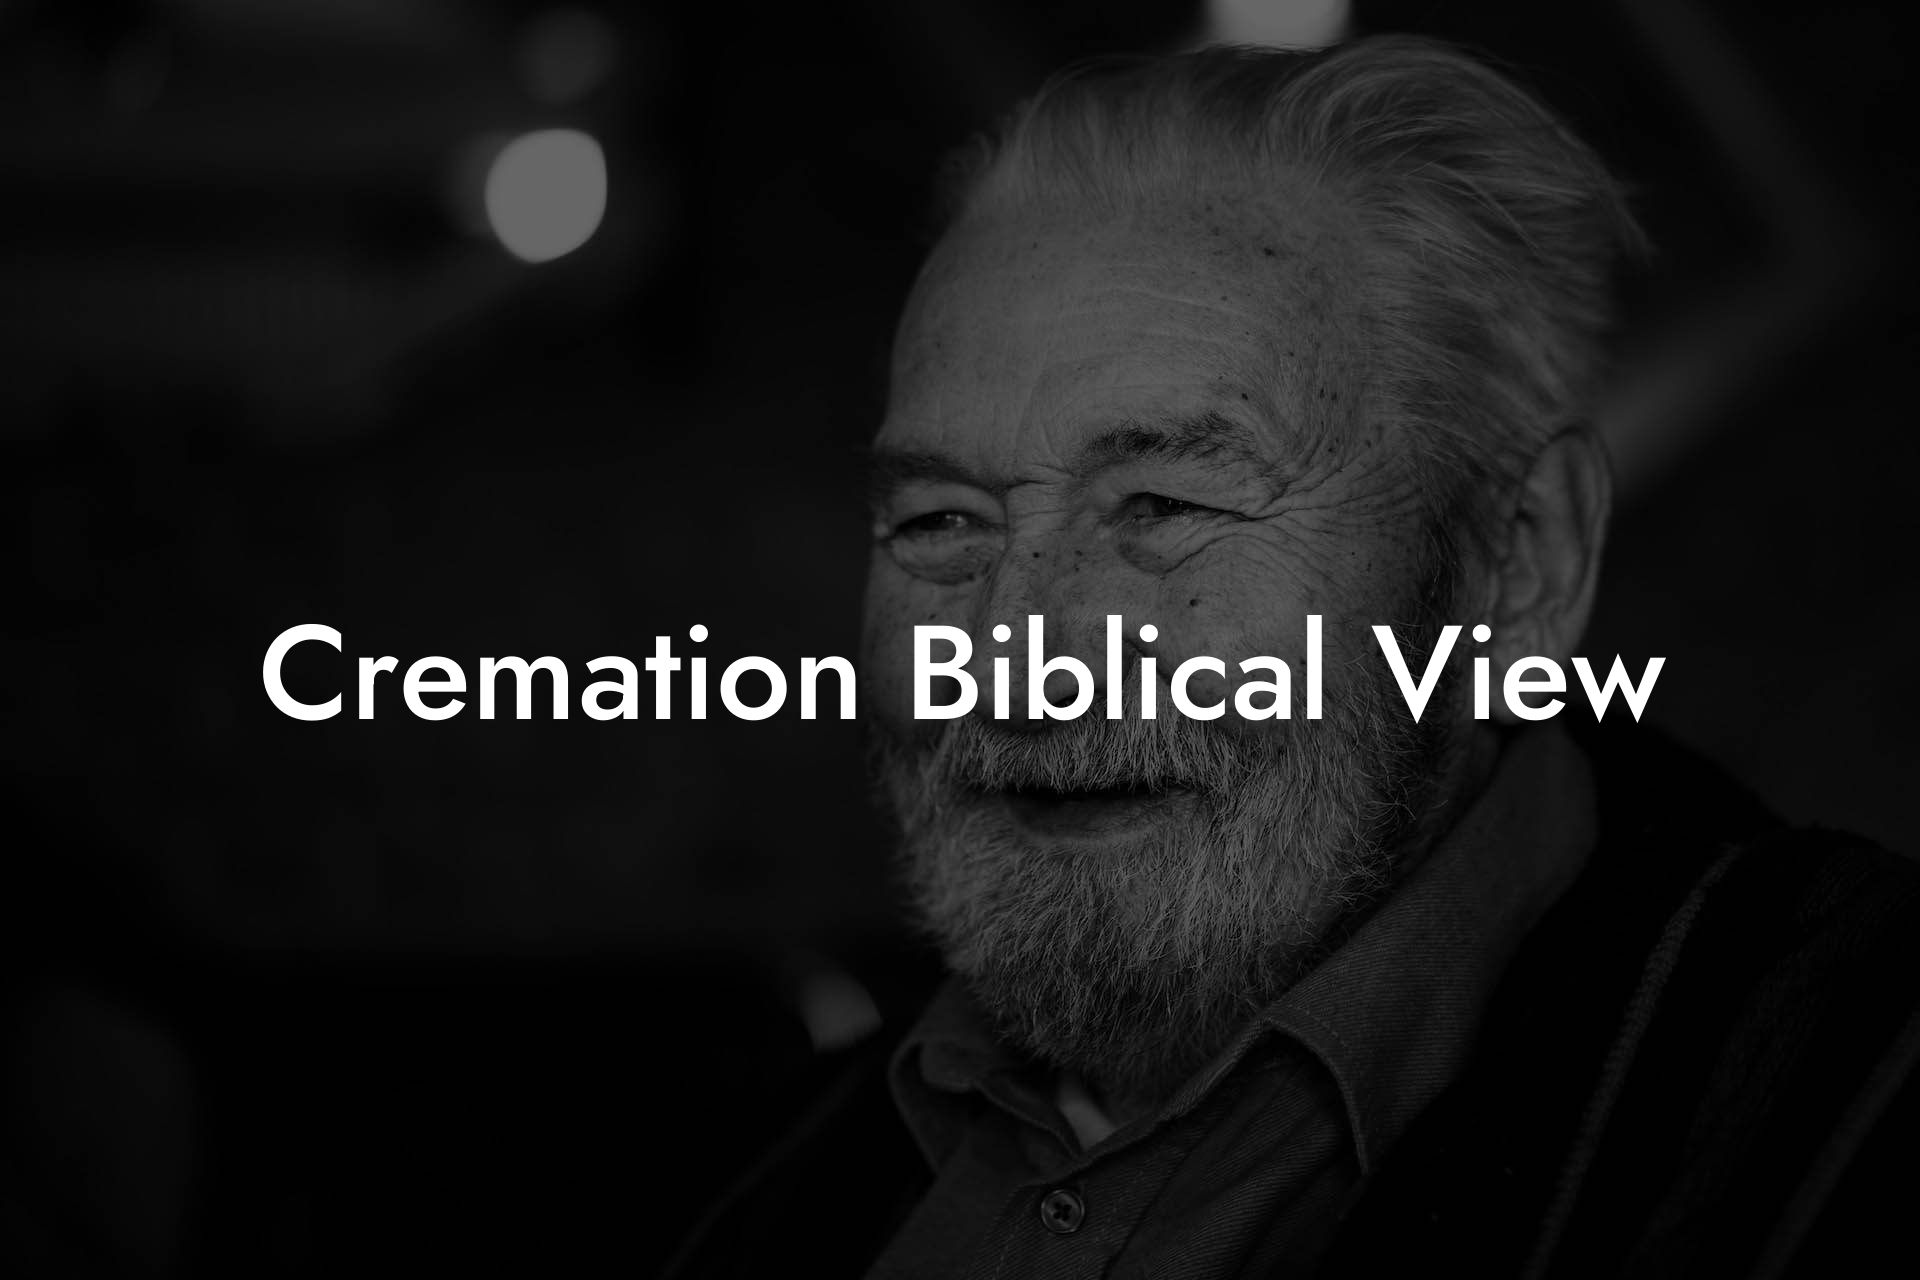 Cremation Biblical View